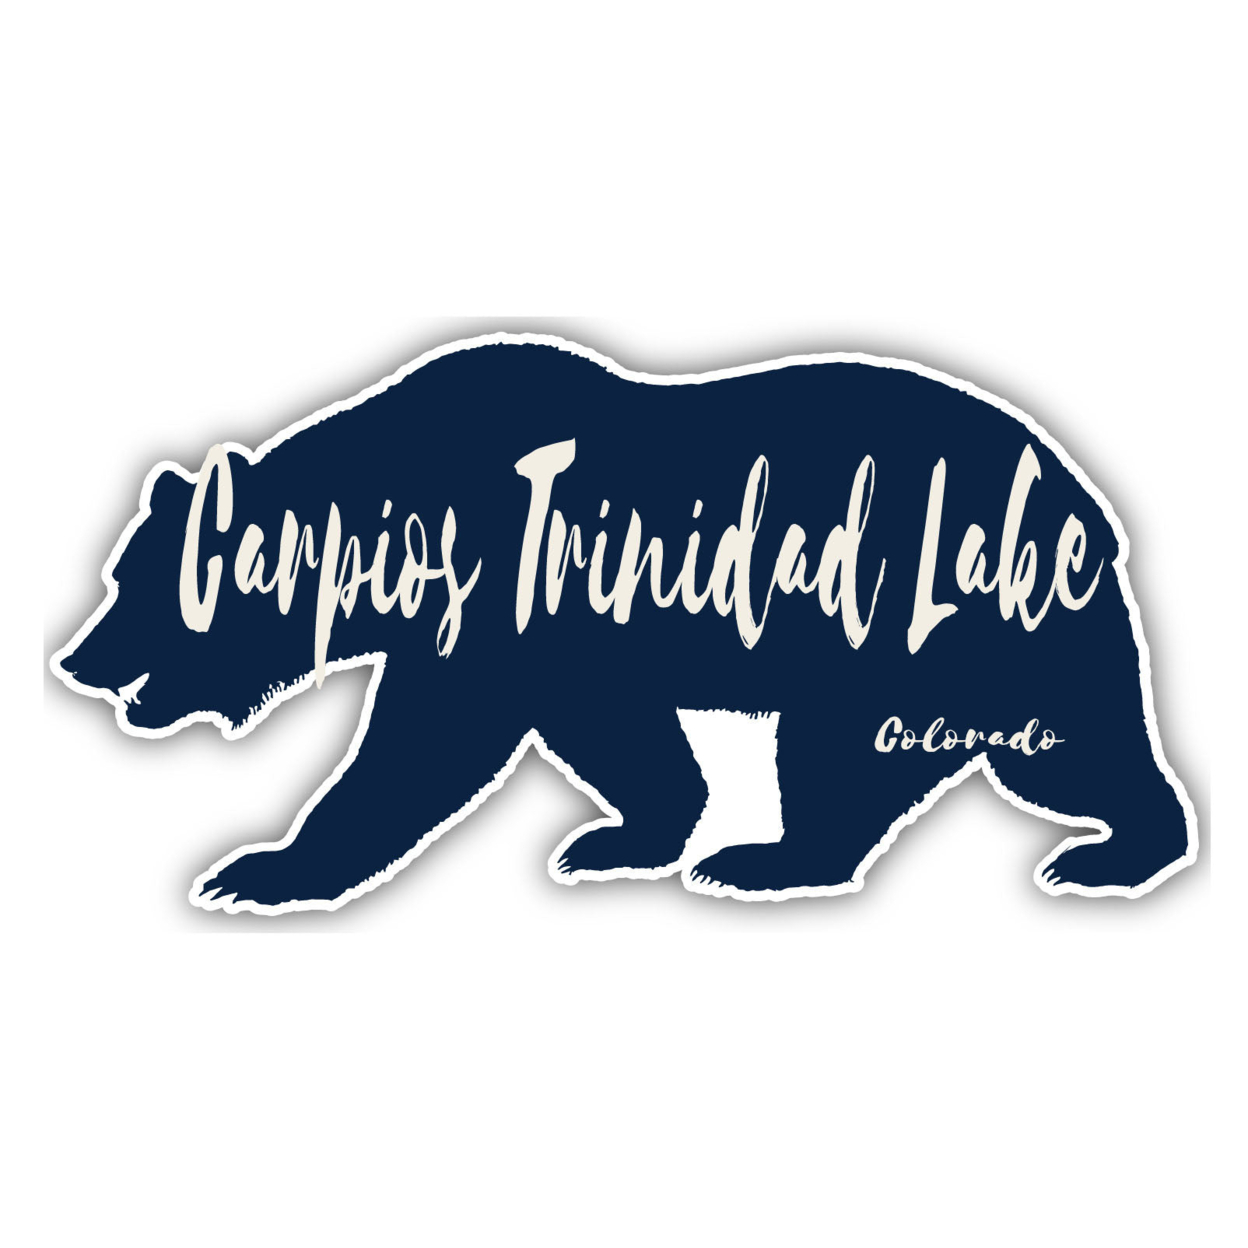 Carpios Trinidad Lake Colorado Souvenir Decorative Stickers (Choose Theme And Size) - 4-Pack, 12-Inch, Bear